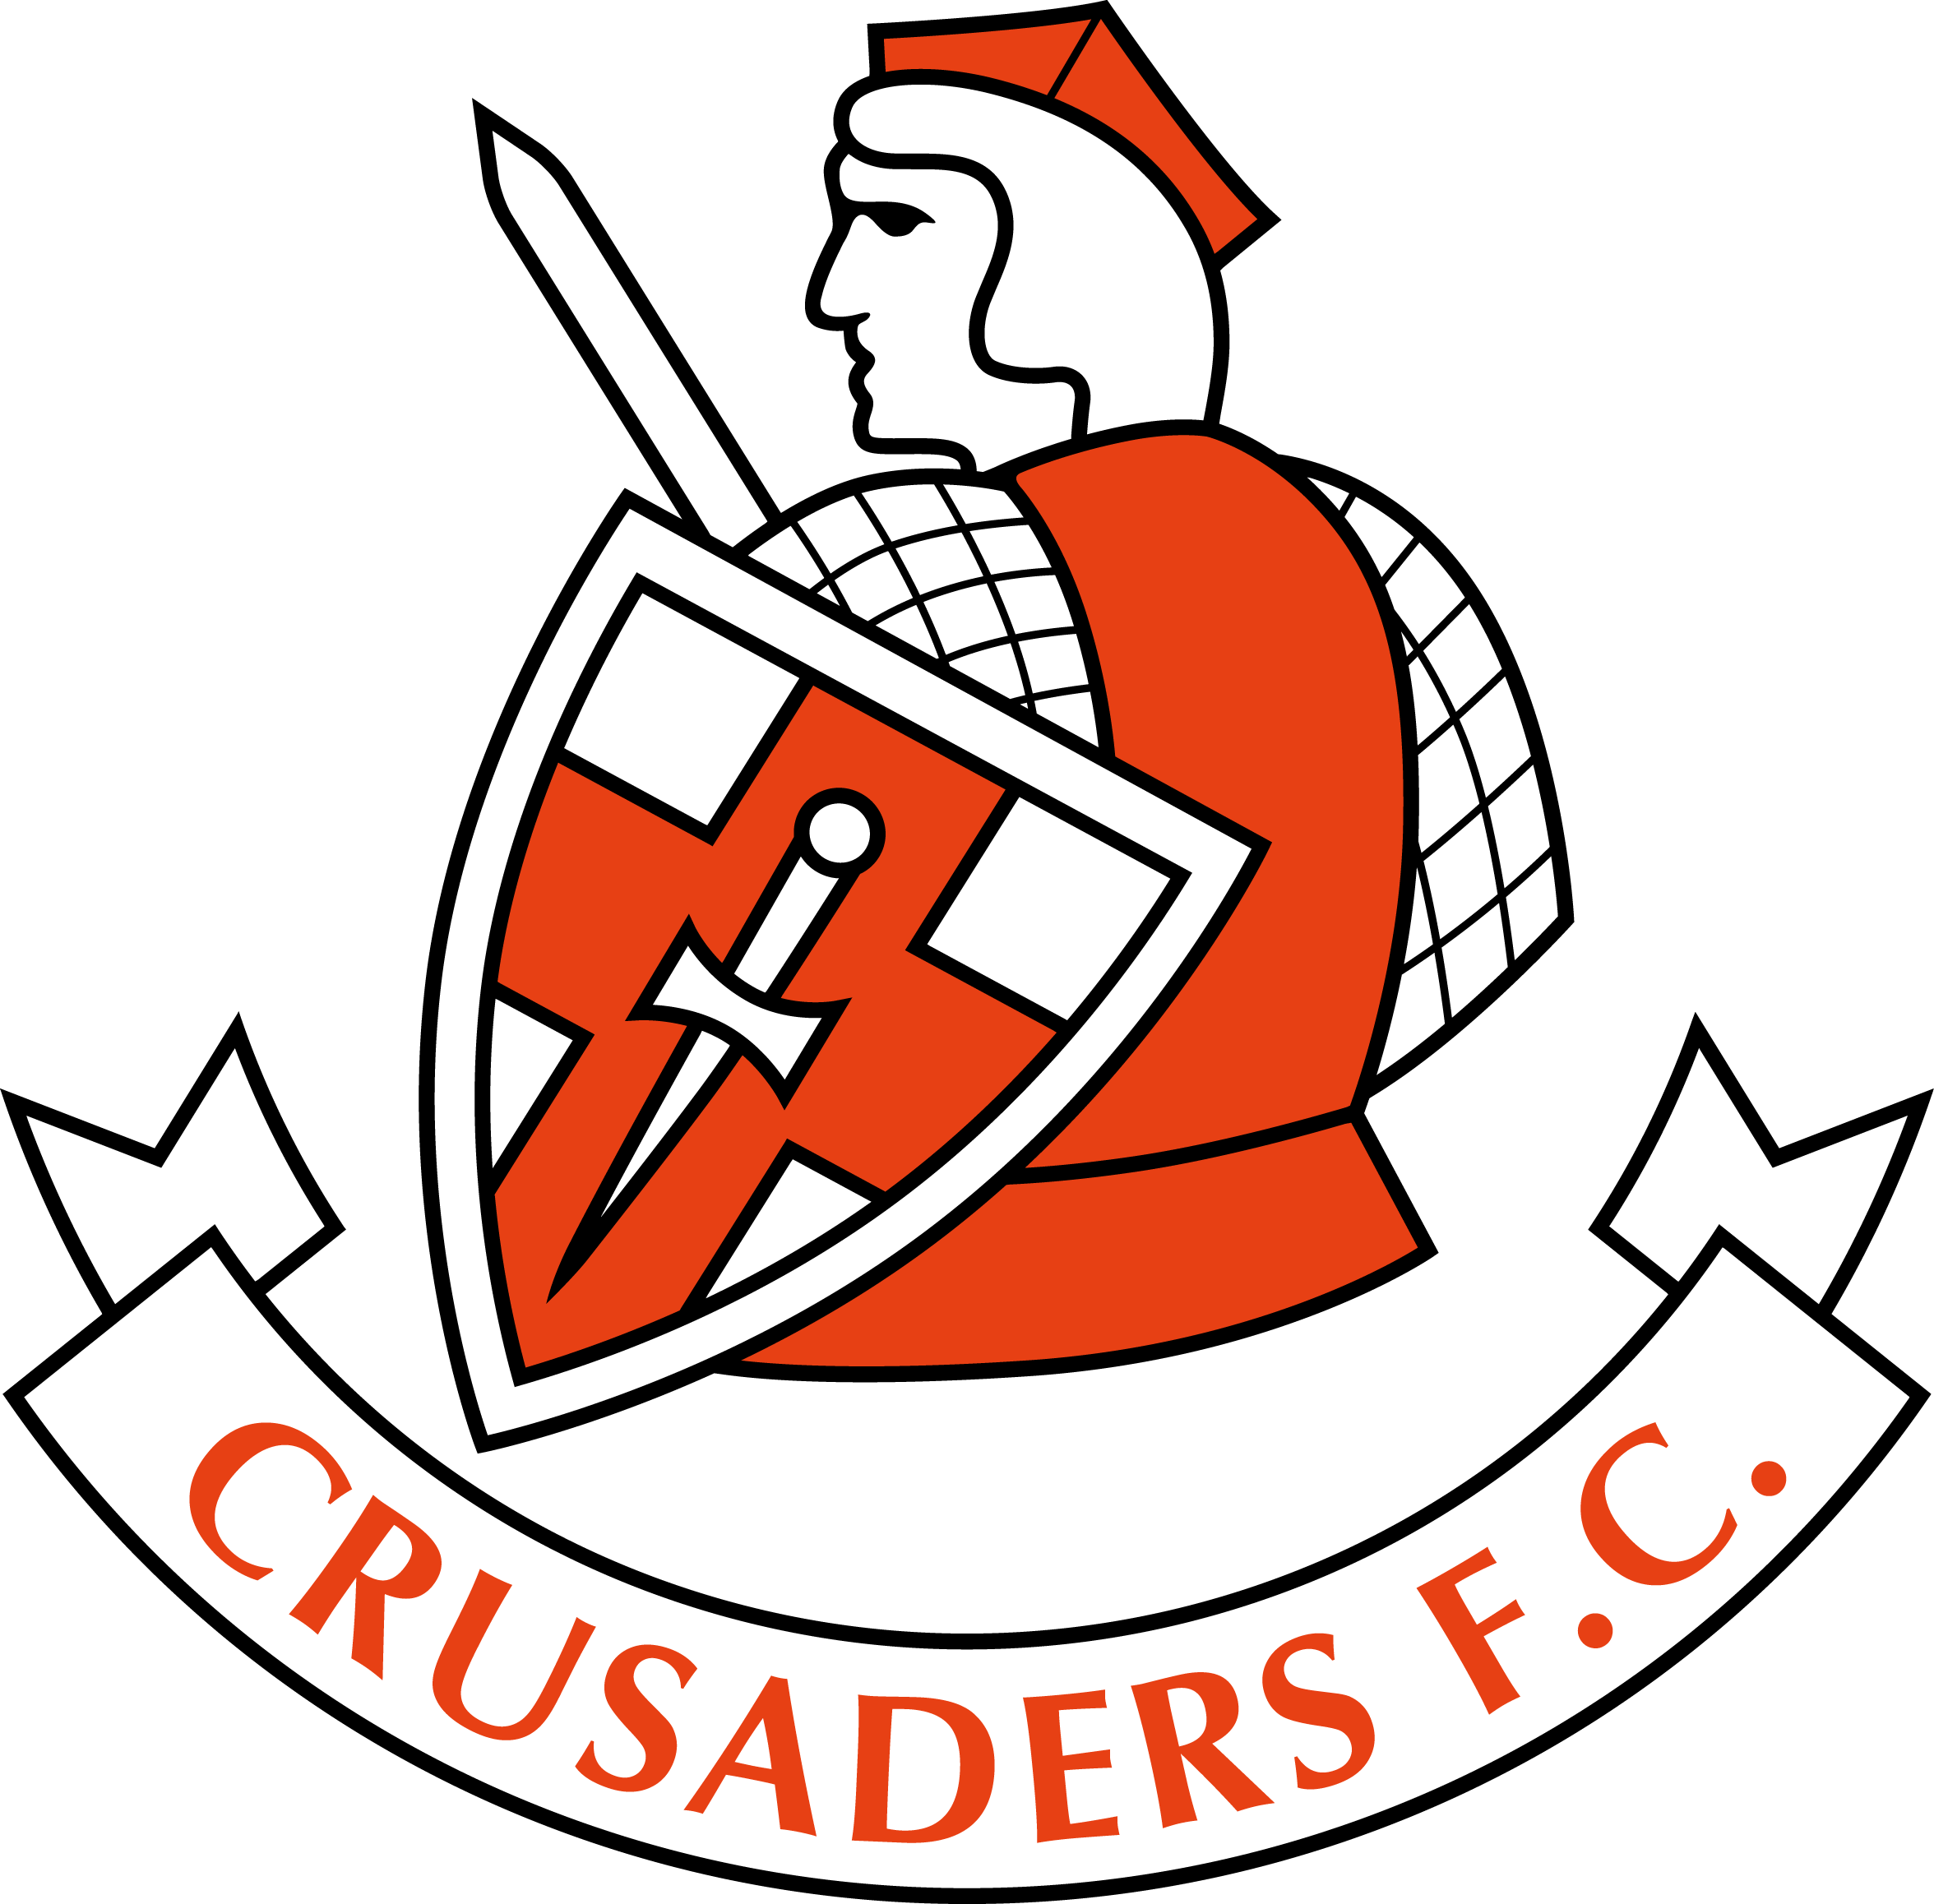 Crusaders Soccer Logo - Lion & bat shield kingdom baseball banner black and white library ...